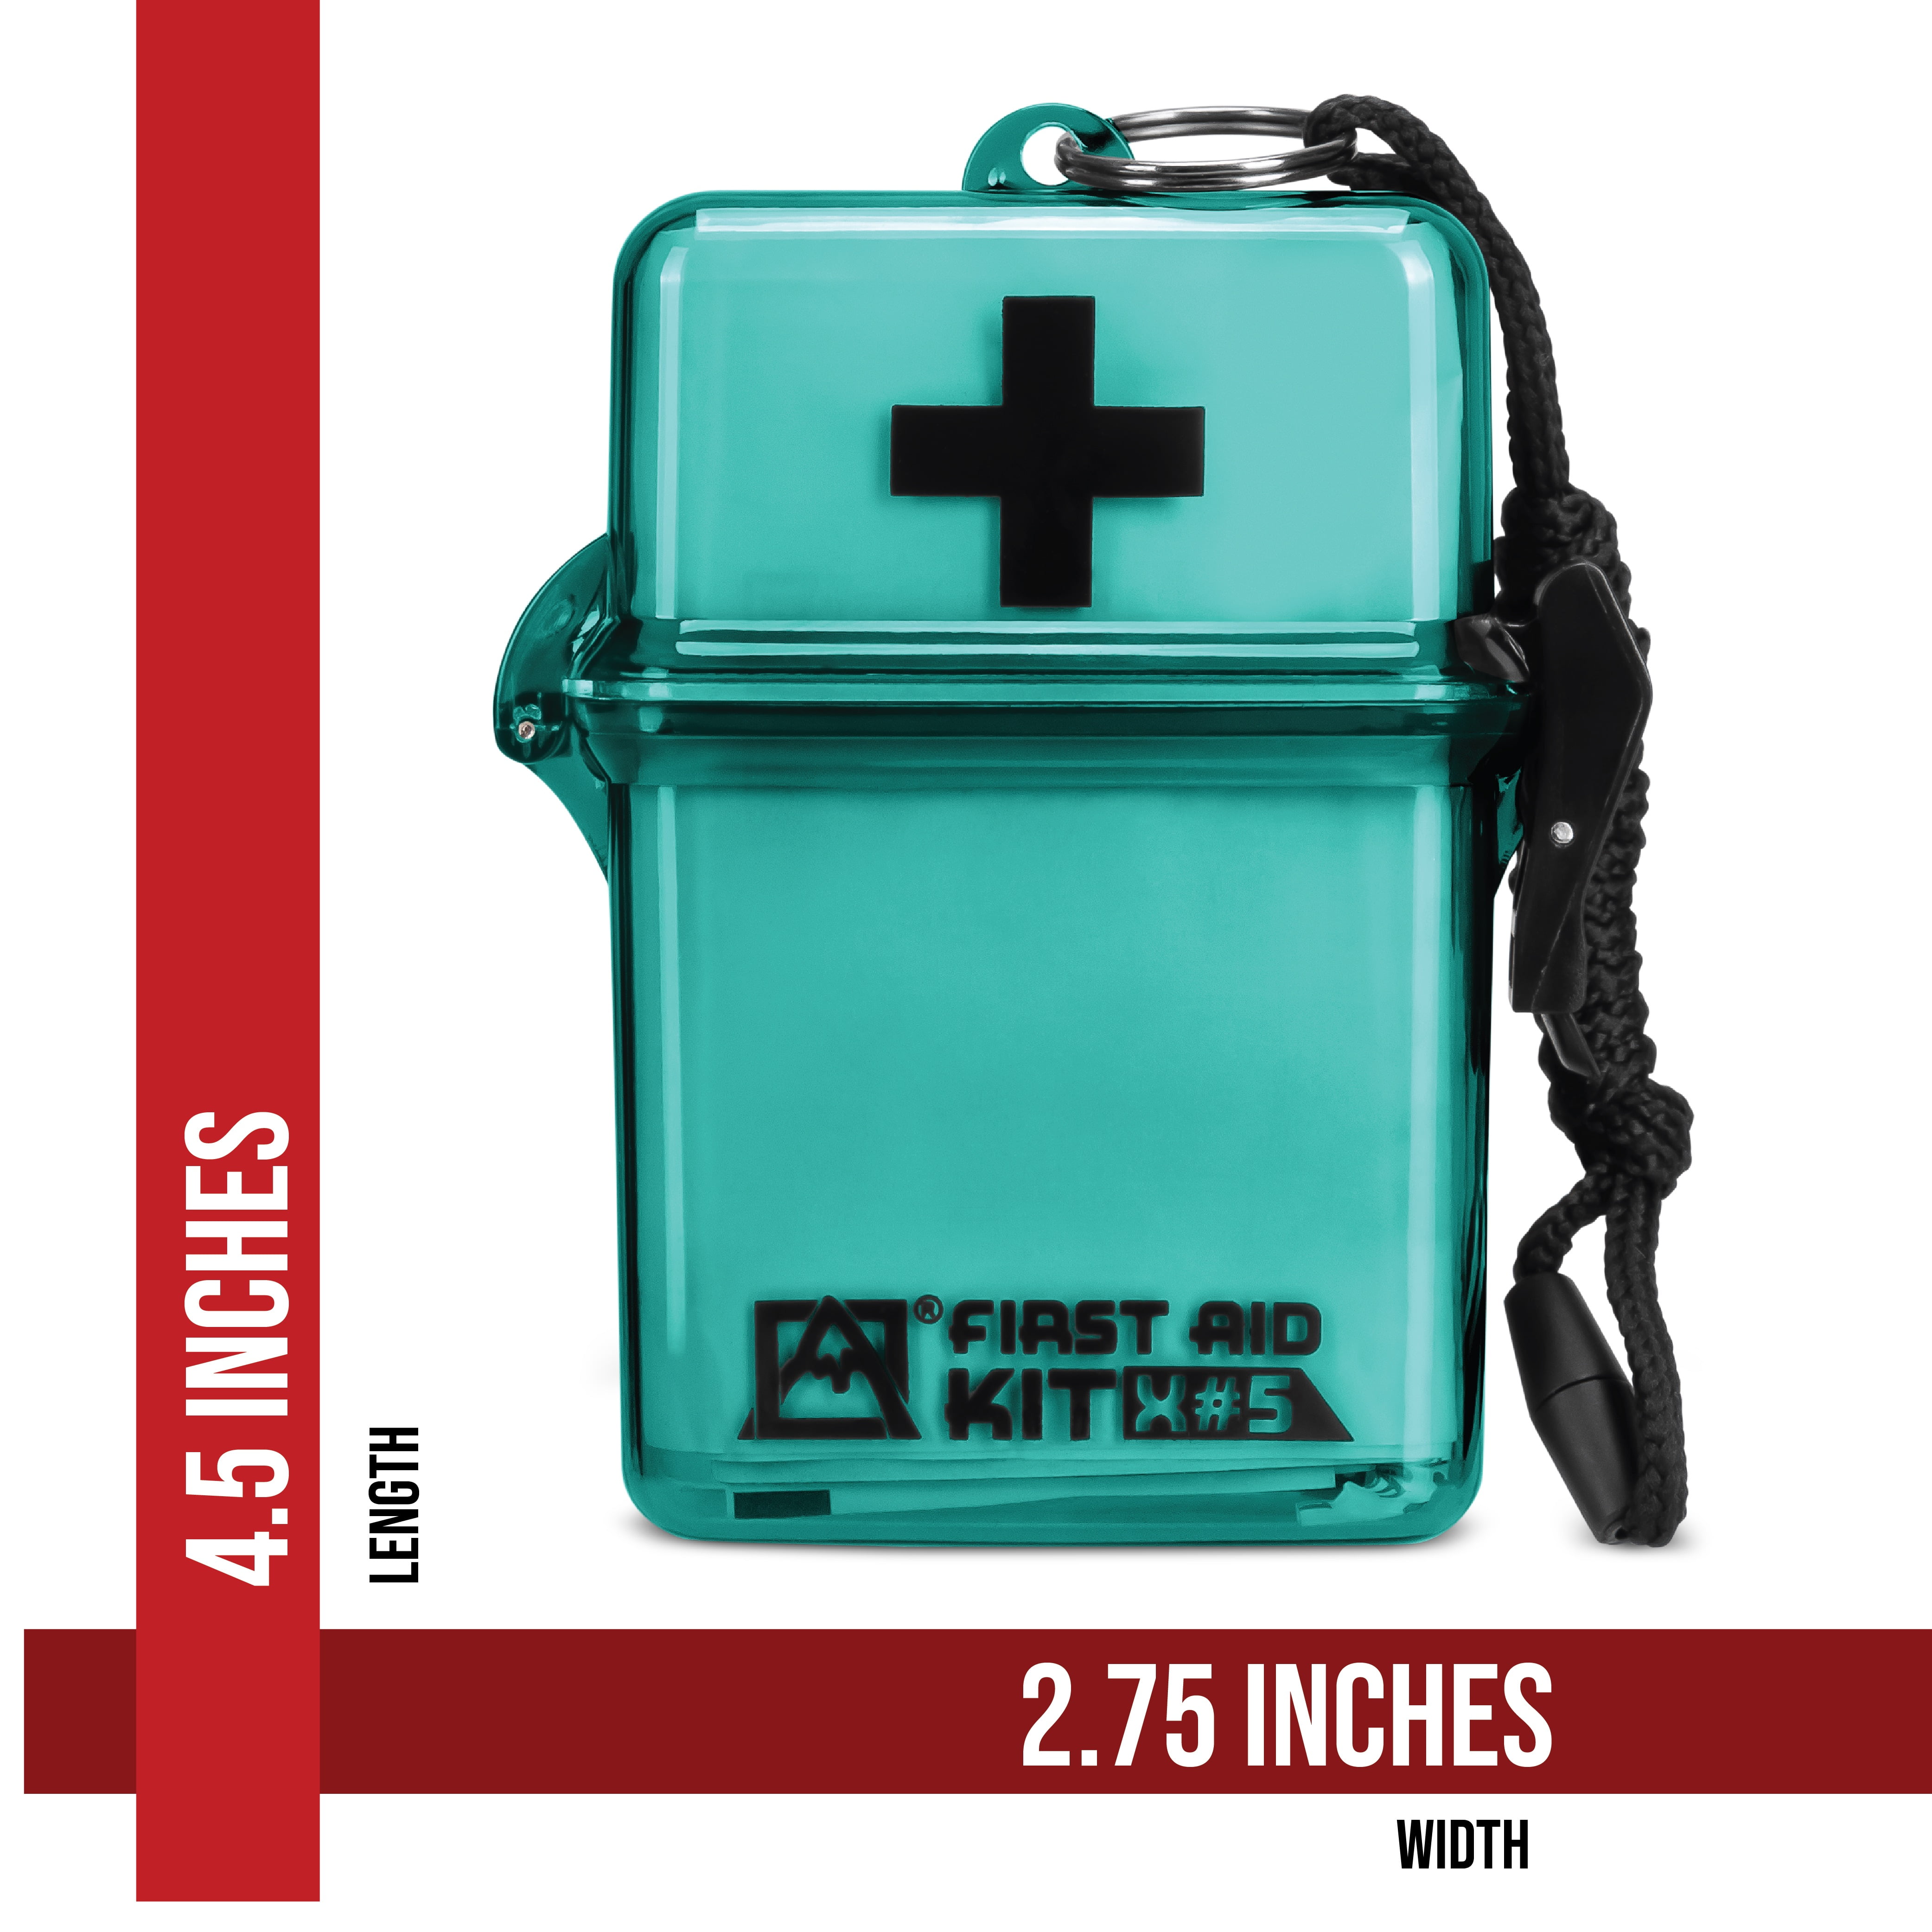 Lacd First Aid Kit WP - Botiquín primeros auxilios – Camping Sport